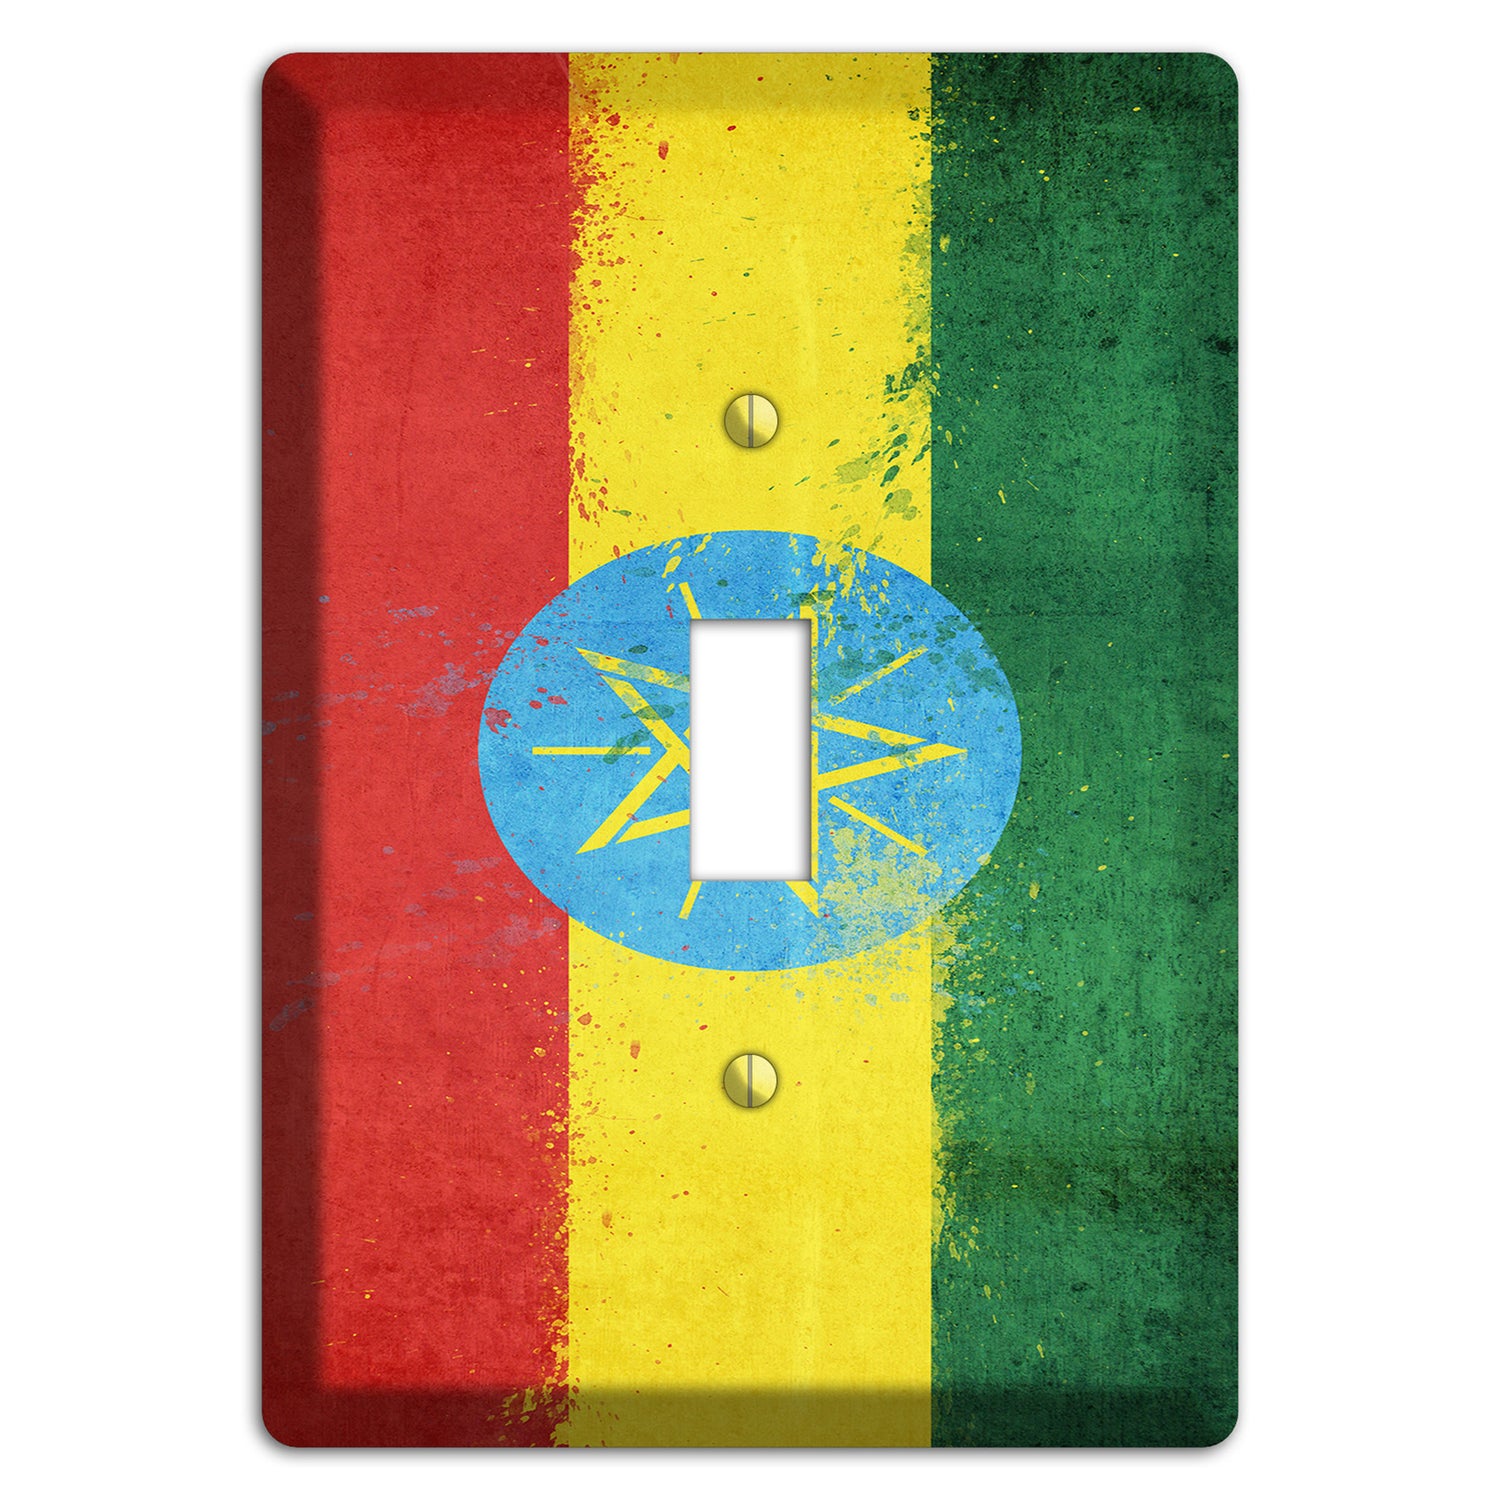 Ethiopia Cover Plates Cover Plates